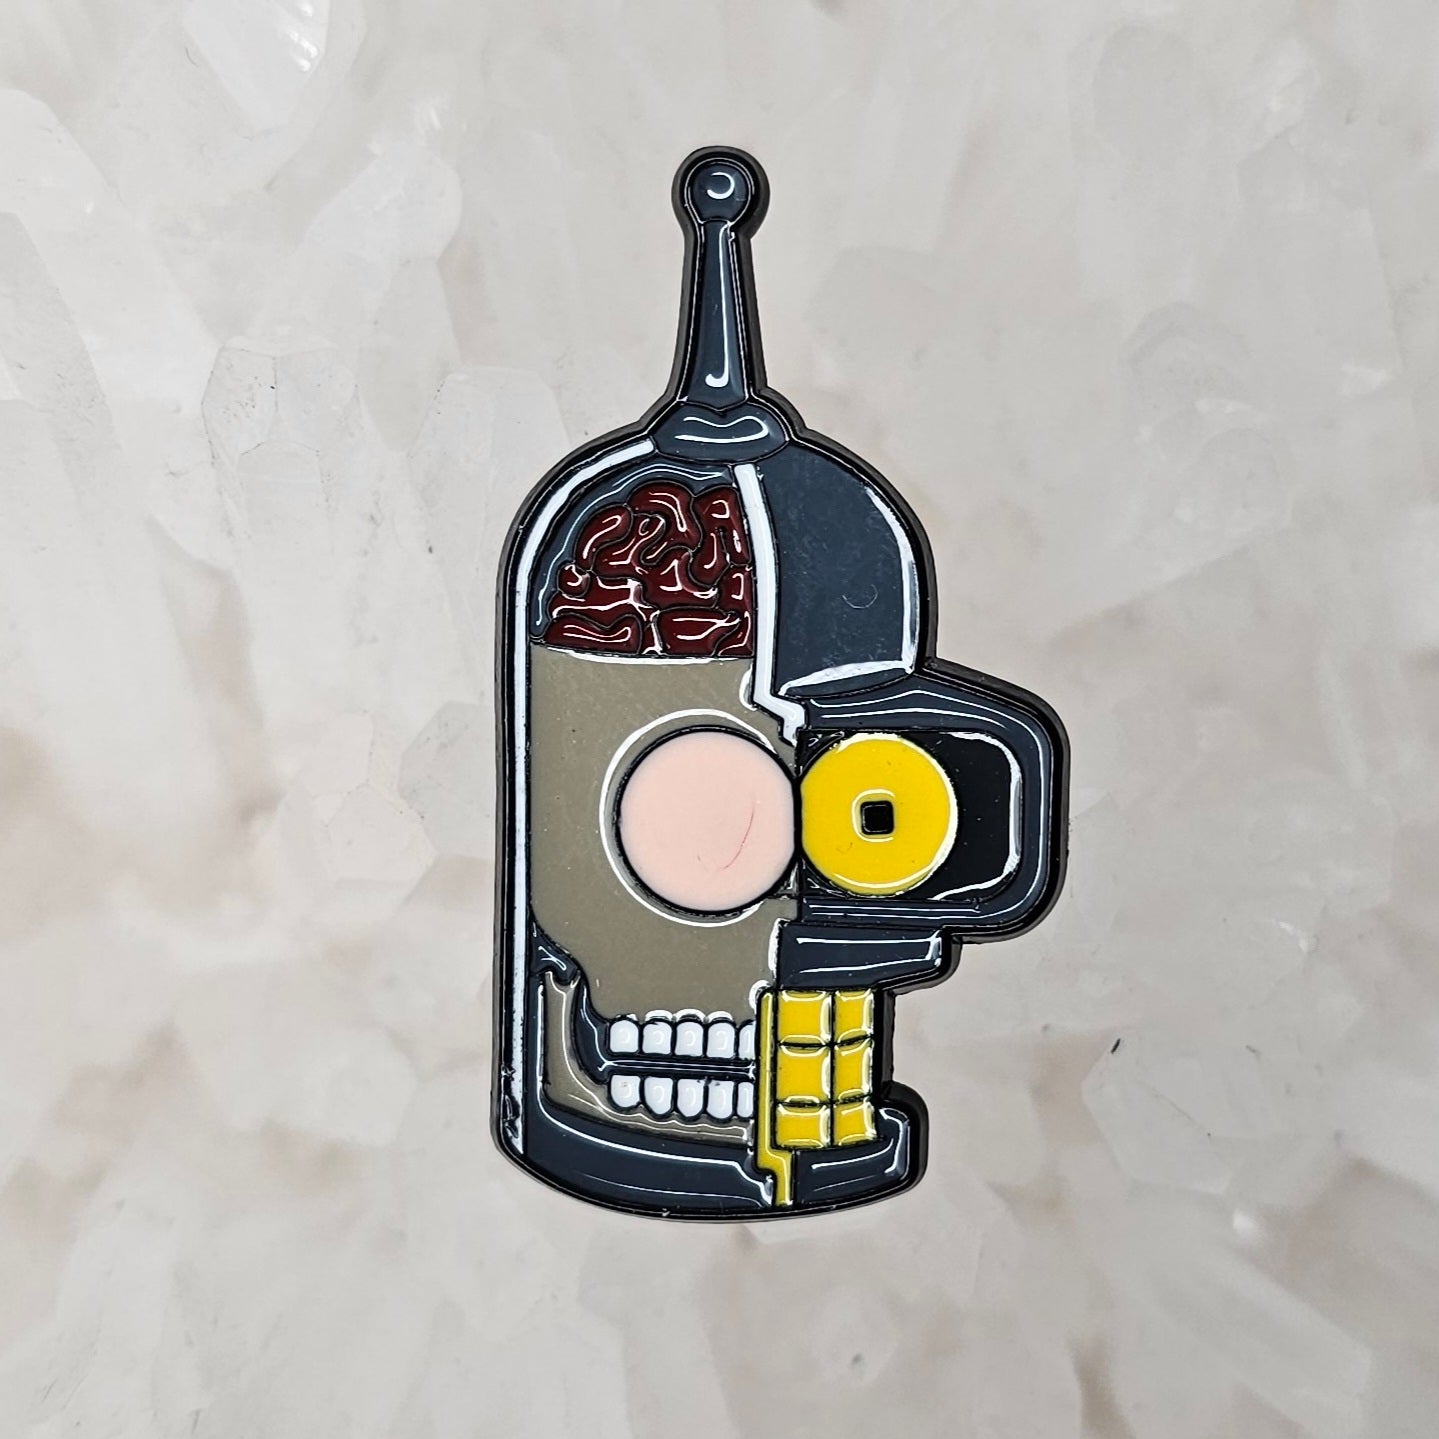 Humanoid Robot Bender Cartoon Comedy Funny Enamel Pins Hat Pins Lapel Pin Brooch Badge Festival Pin